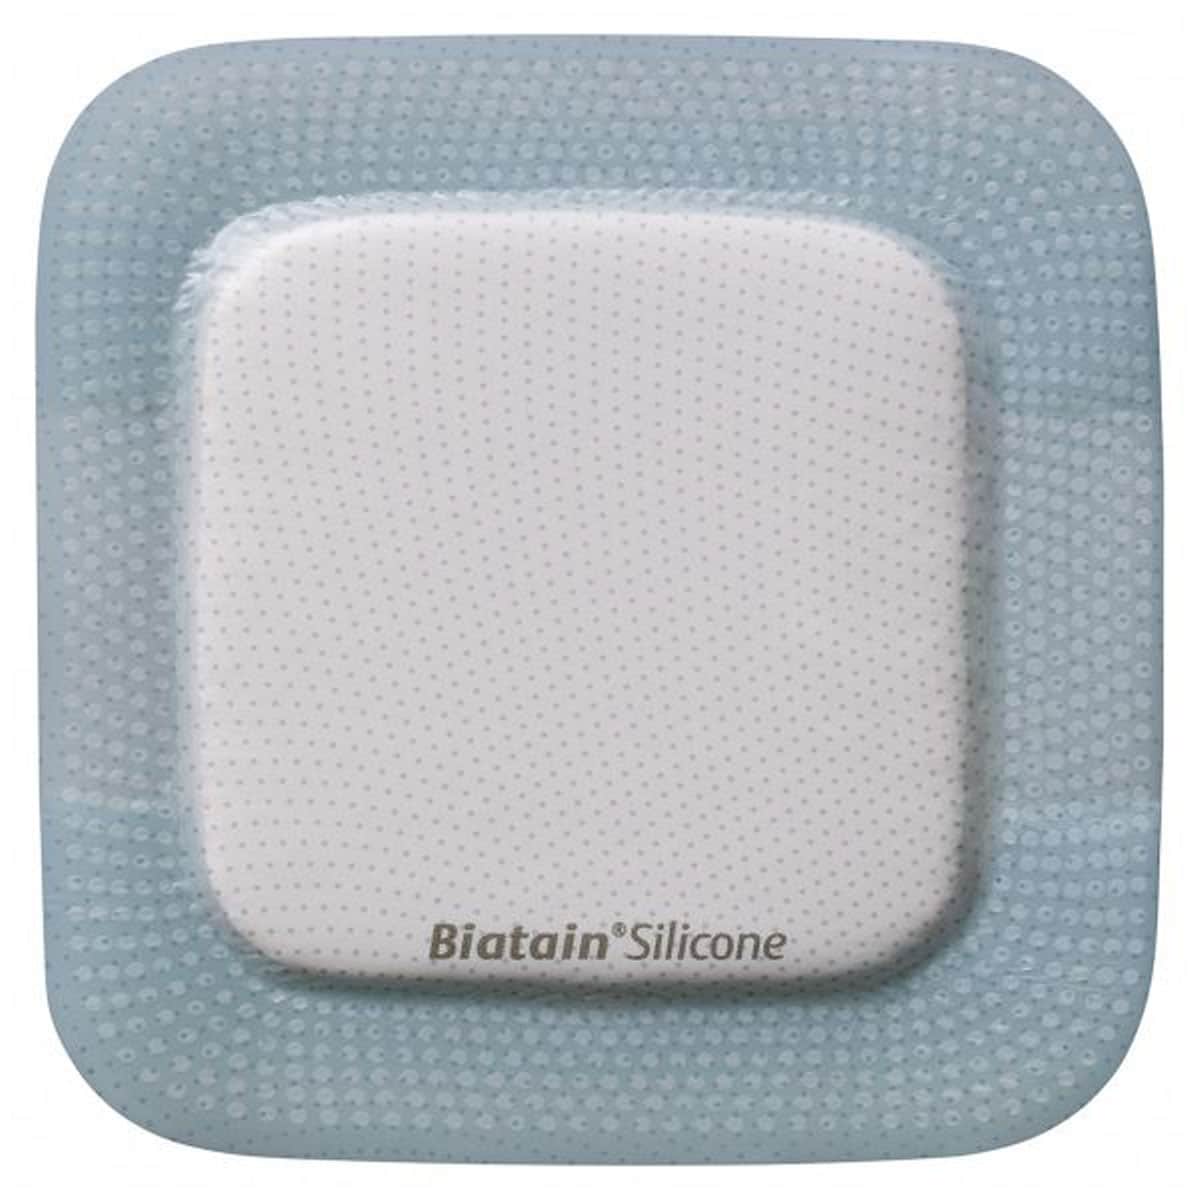 Biatain Silicone Adhesive Foam Dressing 10 x 10cm 1 Pack